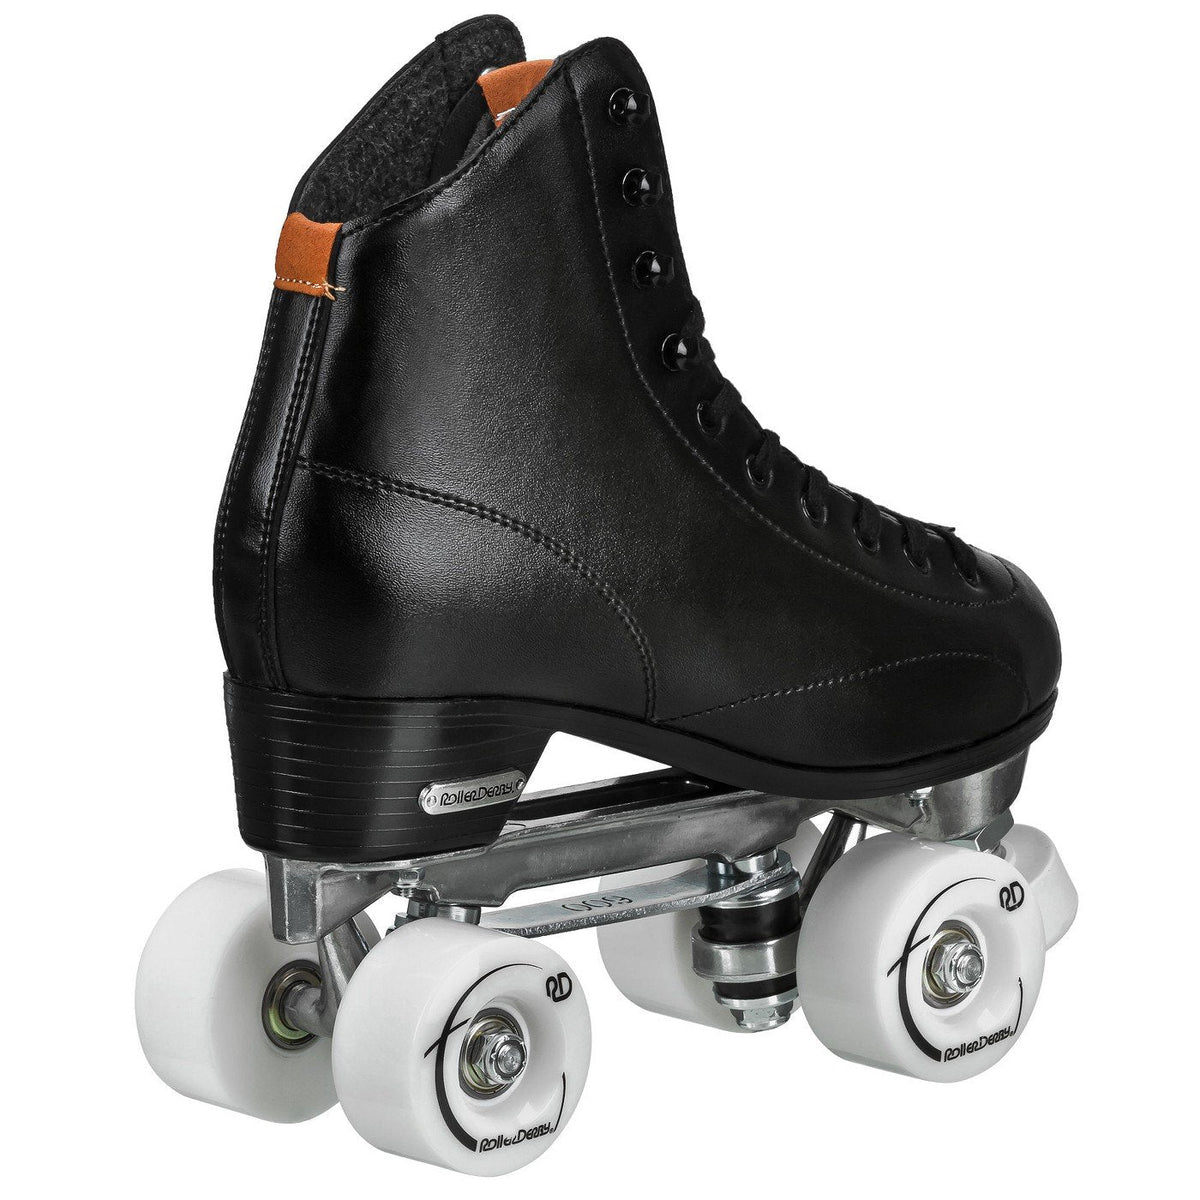 RDS Cruze XR9 Skate - Black Roller Skates